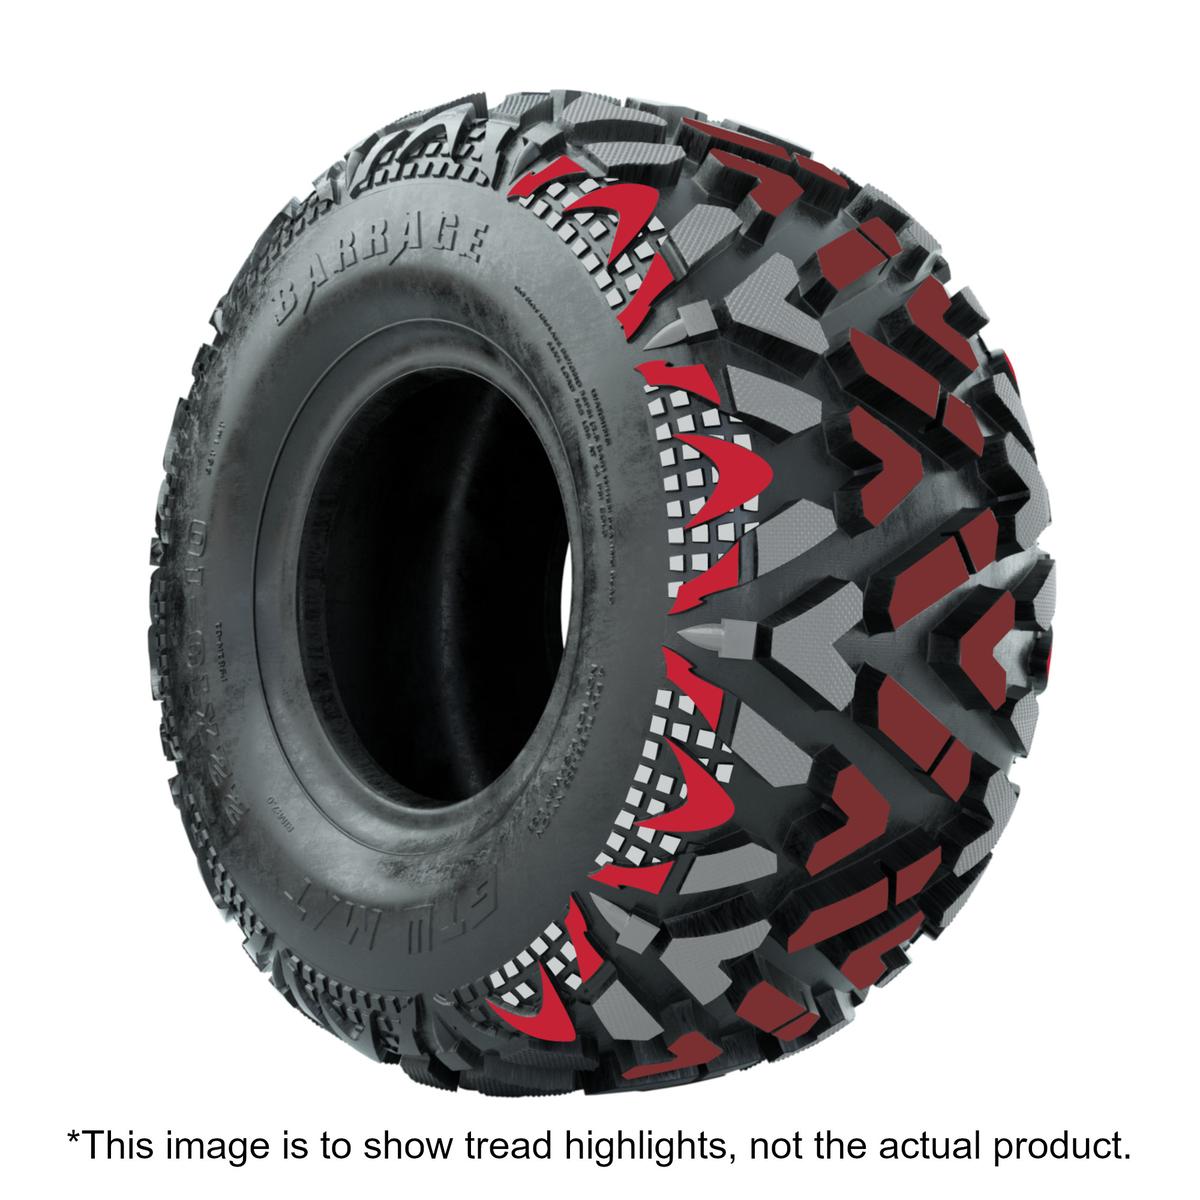 GTW Spyder Matte Black 10 in Wheels with 22x10-10 Barrage Mud Tires – Full Set